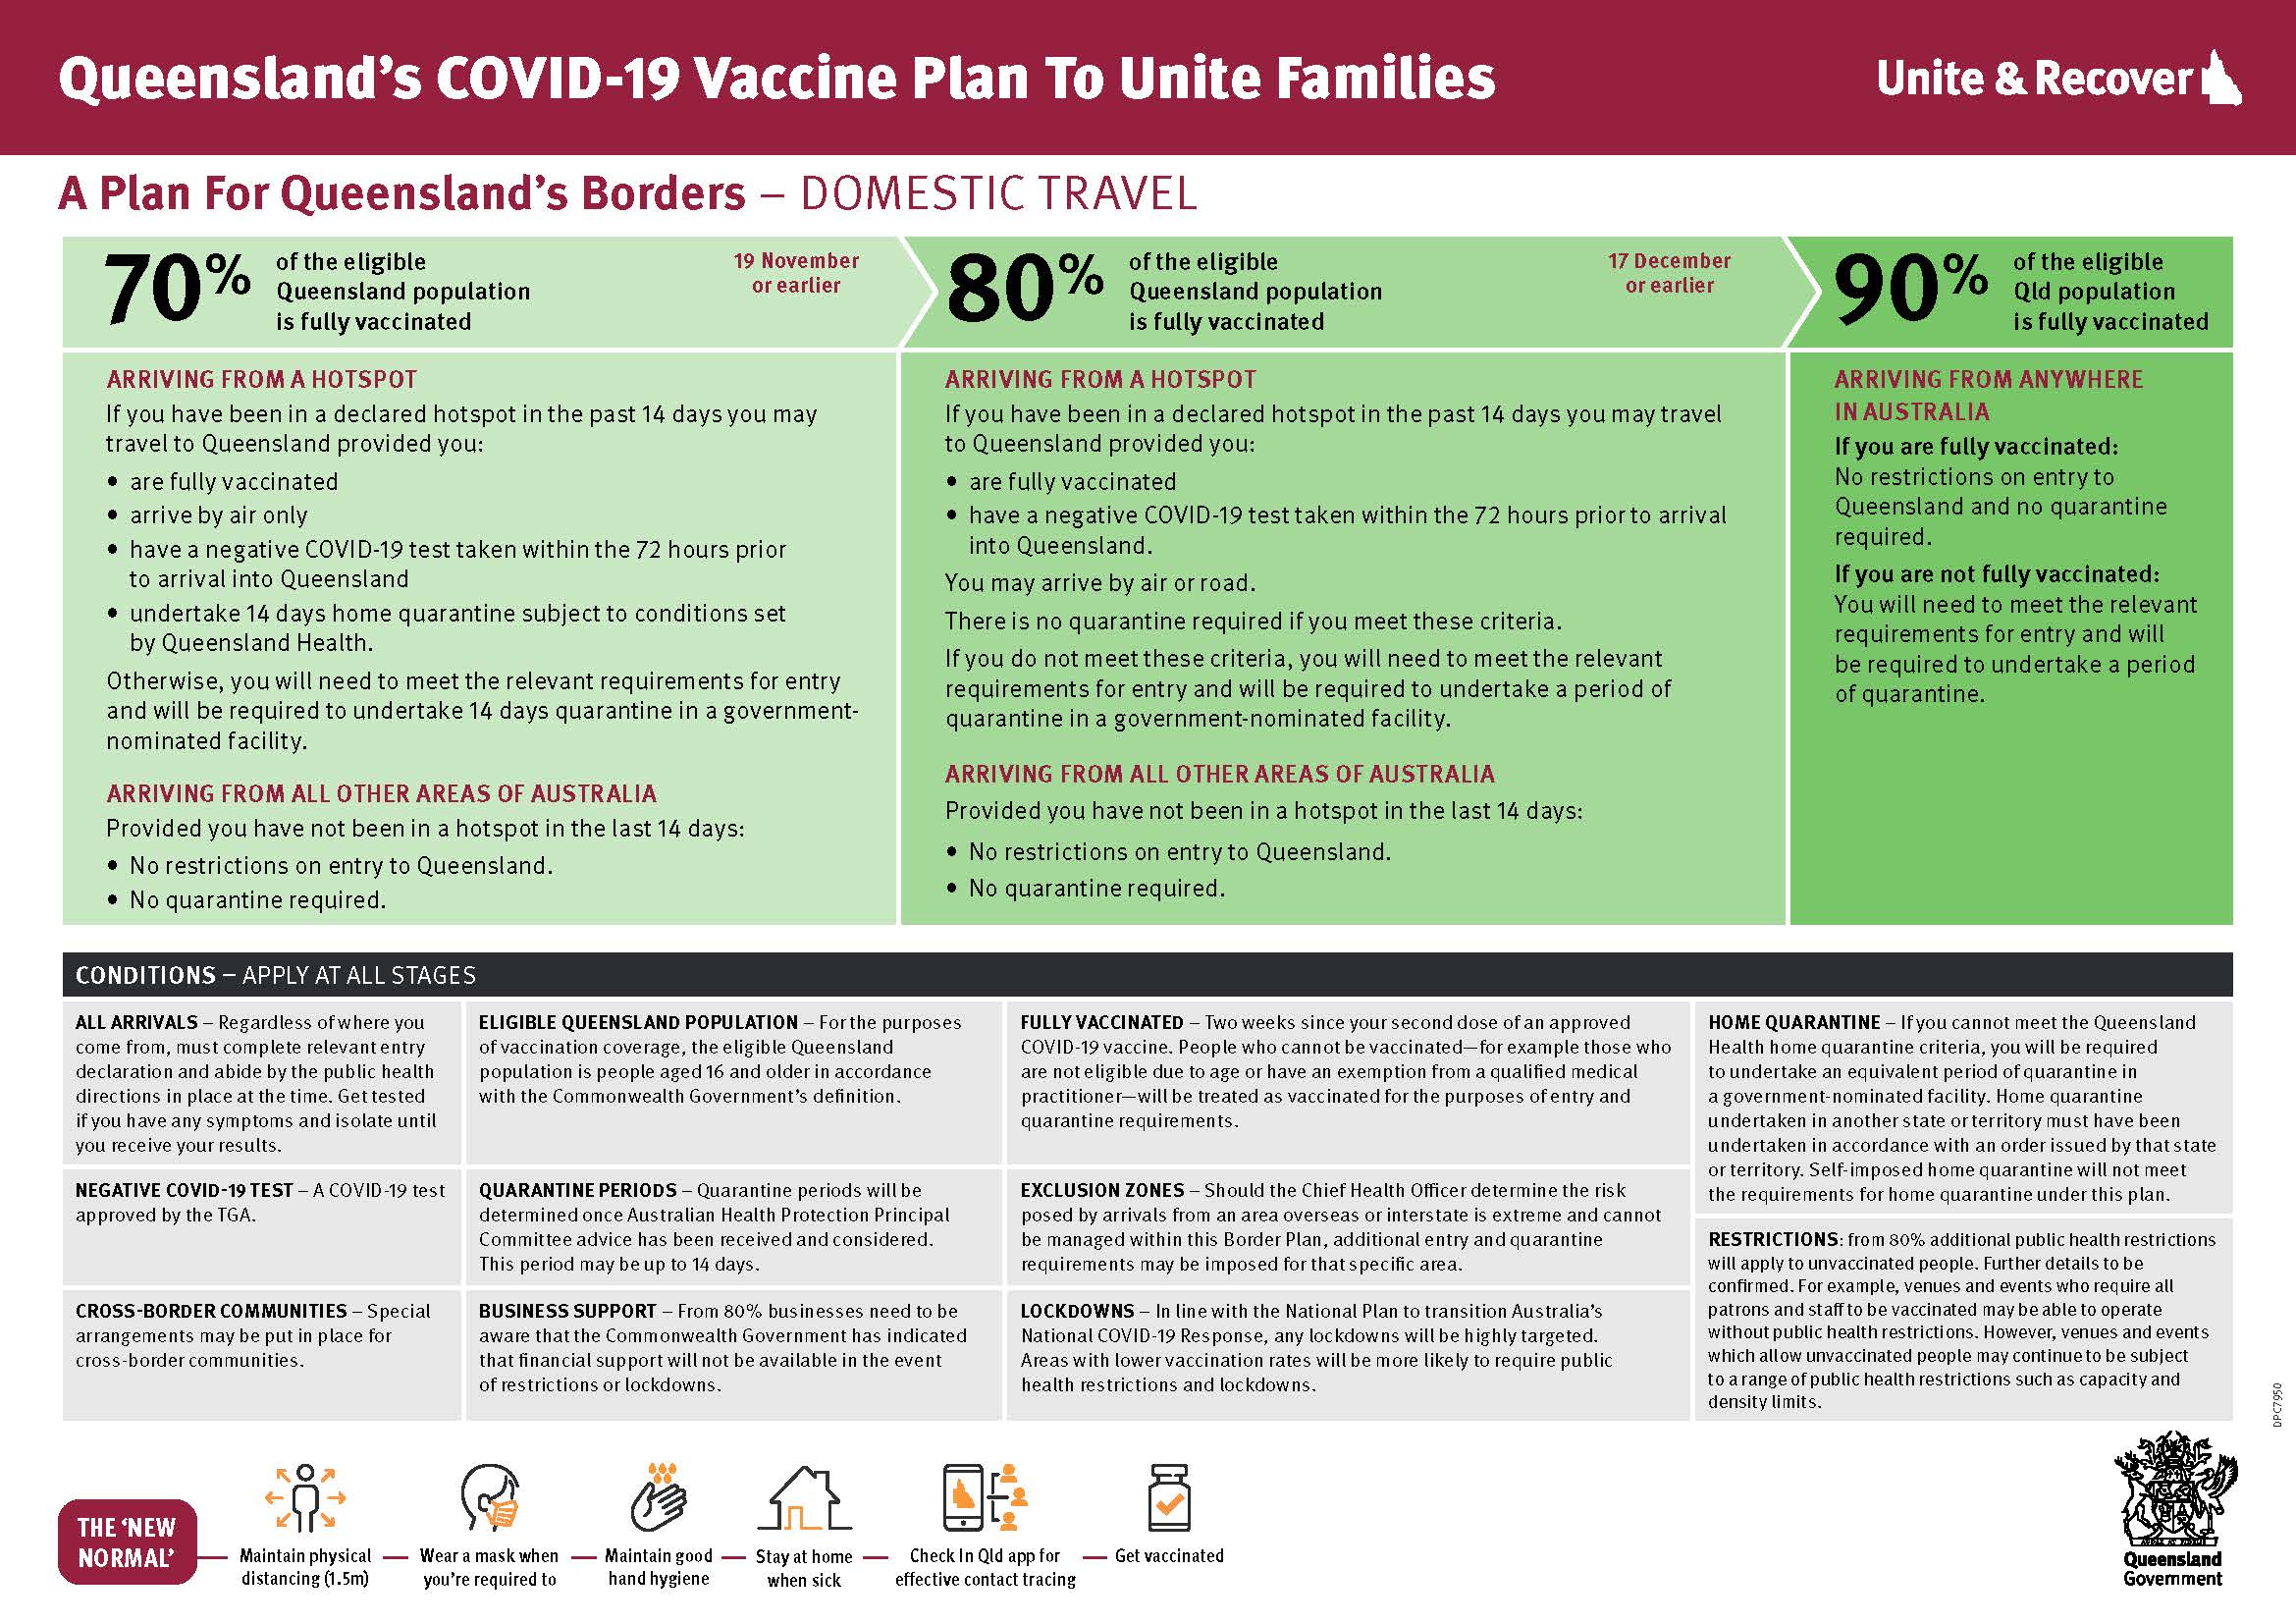 Image (1/2): Queensland’s COVID-19 Vaccine Plan to Unite Families – Domestic Travel